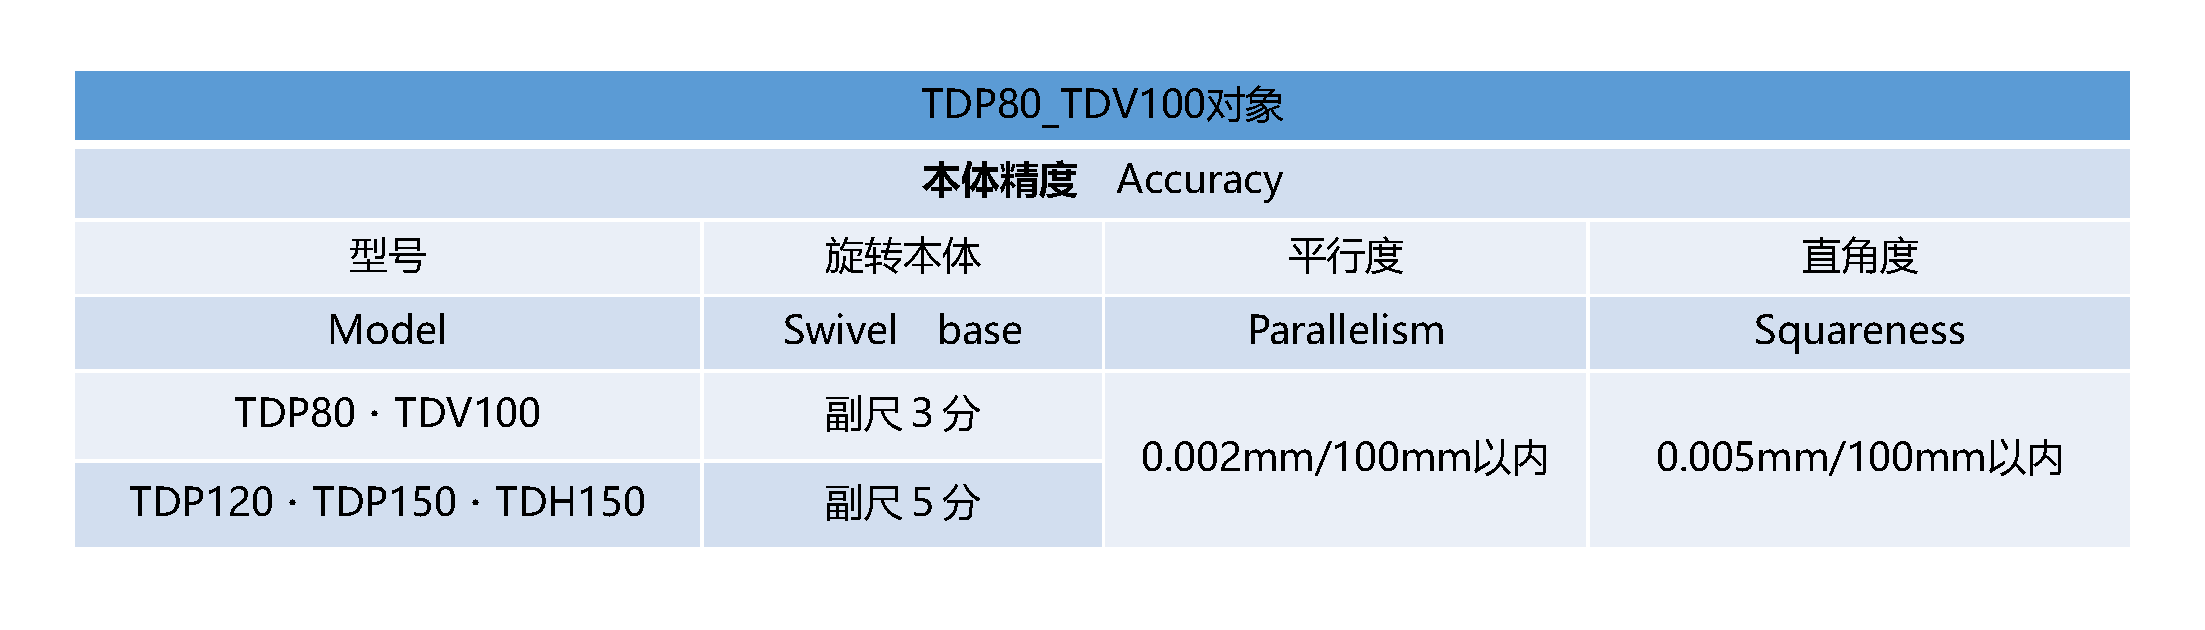 TDP80_TDP120_TDV100_TDP150_TDH150_精度表 - 中文.png